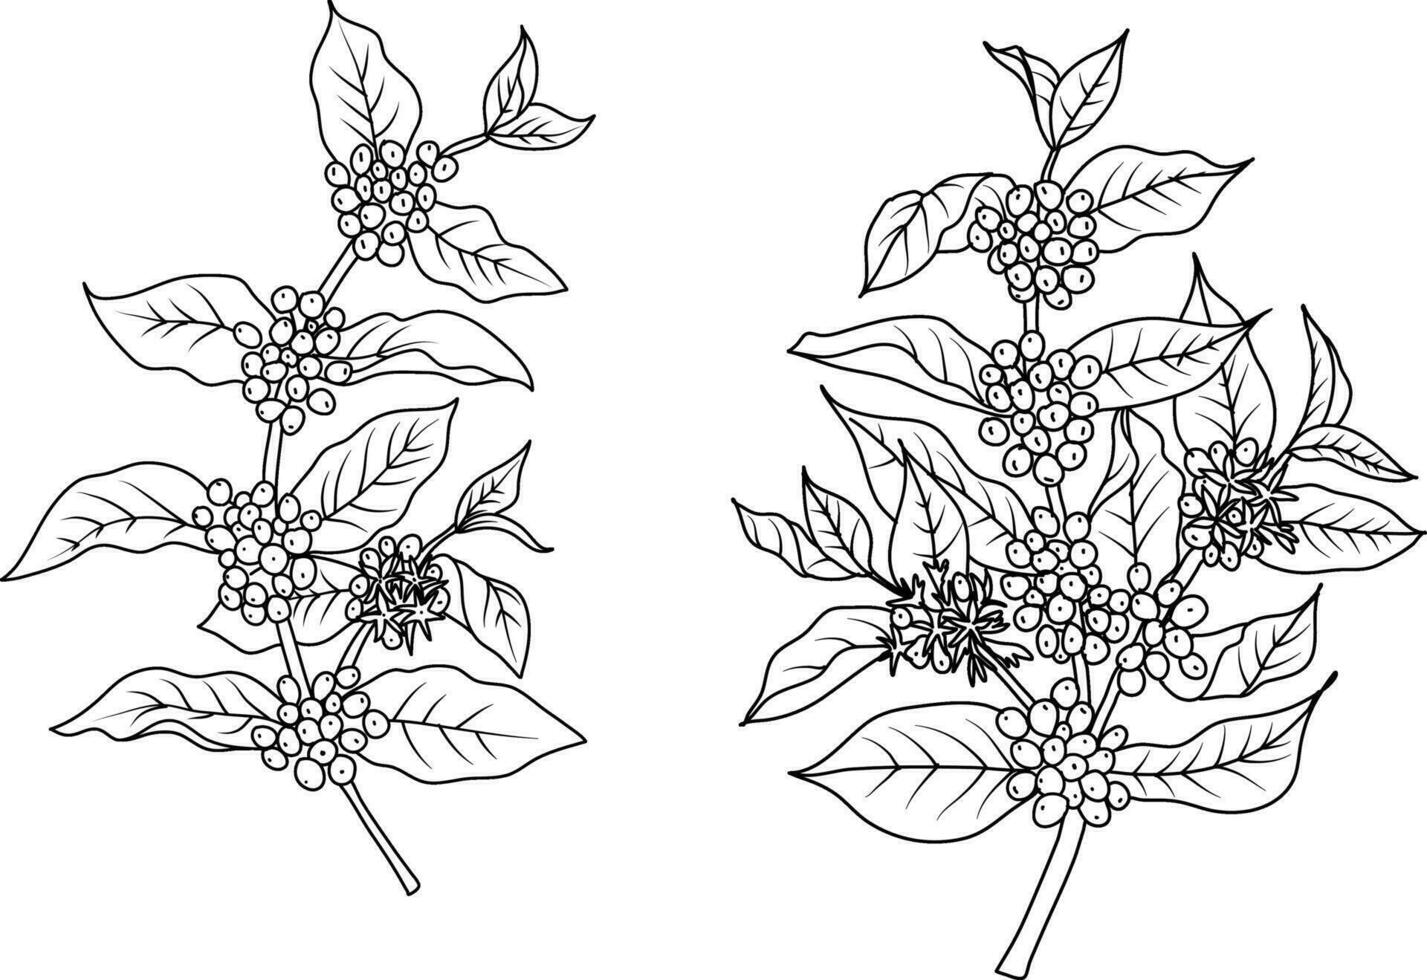 Coffee sketch. Coffee plant. Vector illustration.